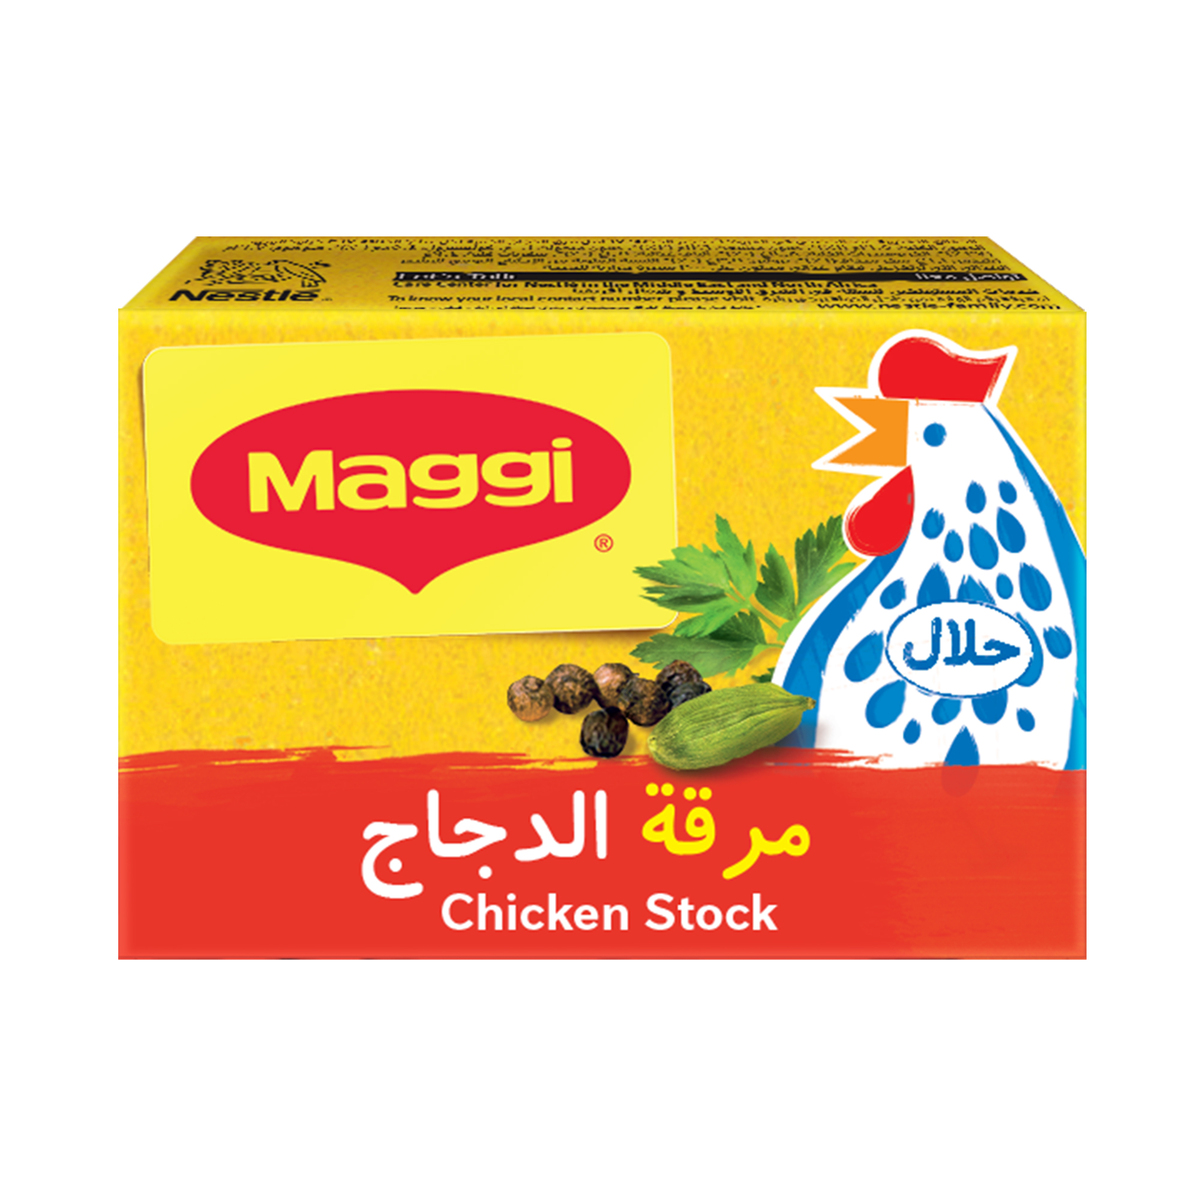 Maggi Chicken Stock 18 g